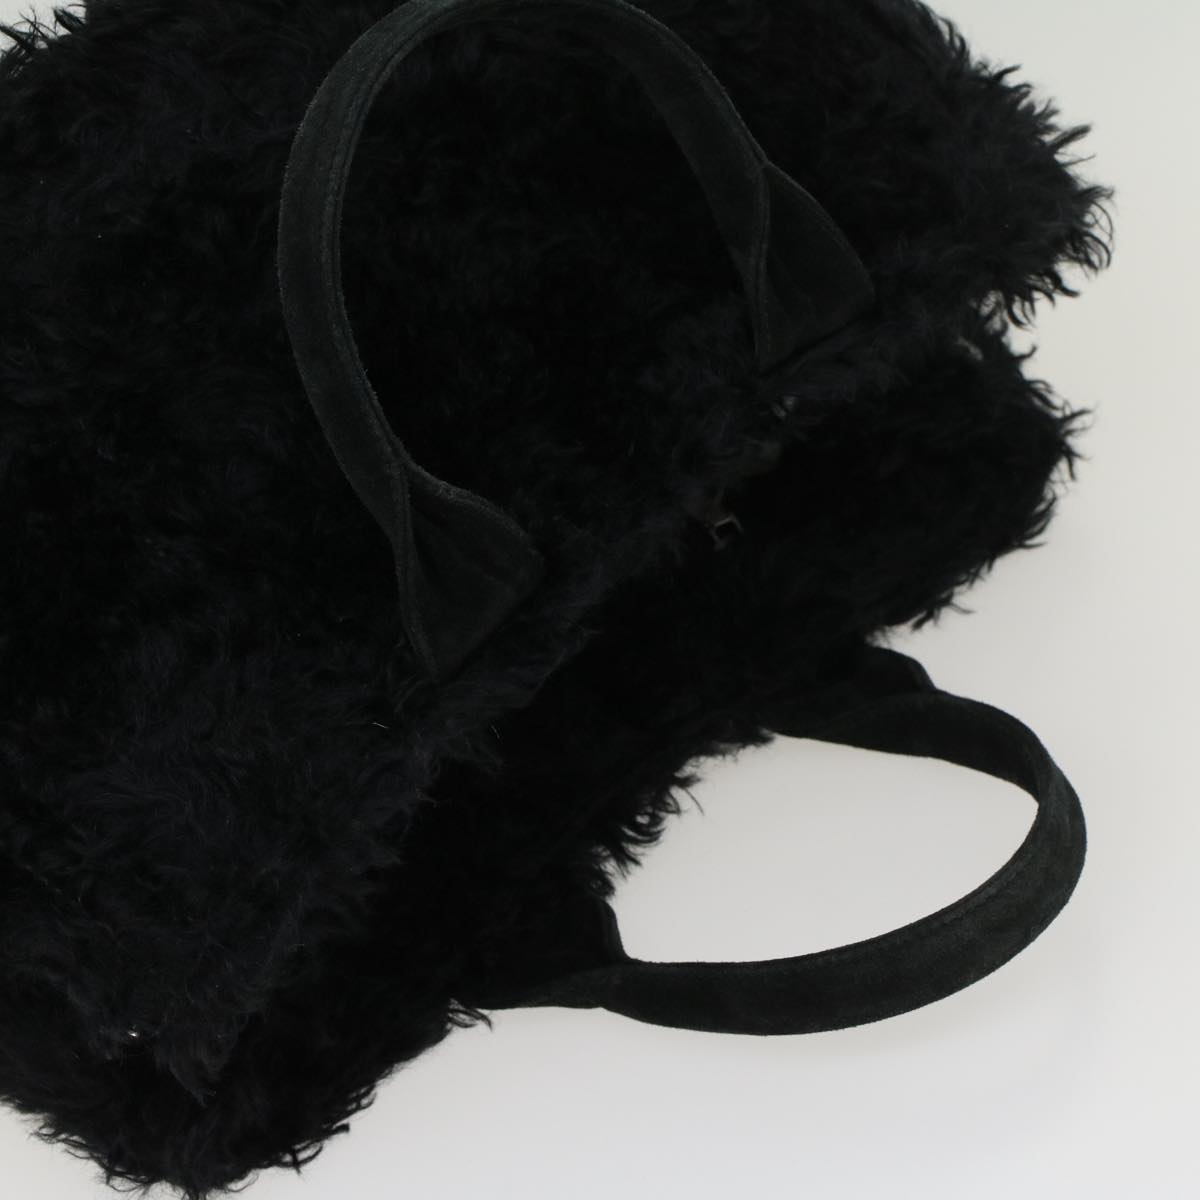 PRADA Canapa Hand Bag Fur Black Auth 42983